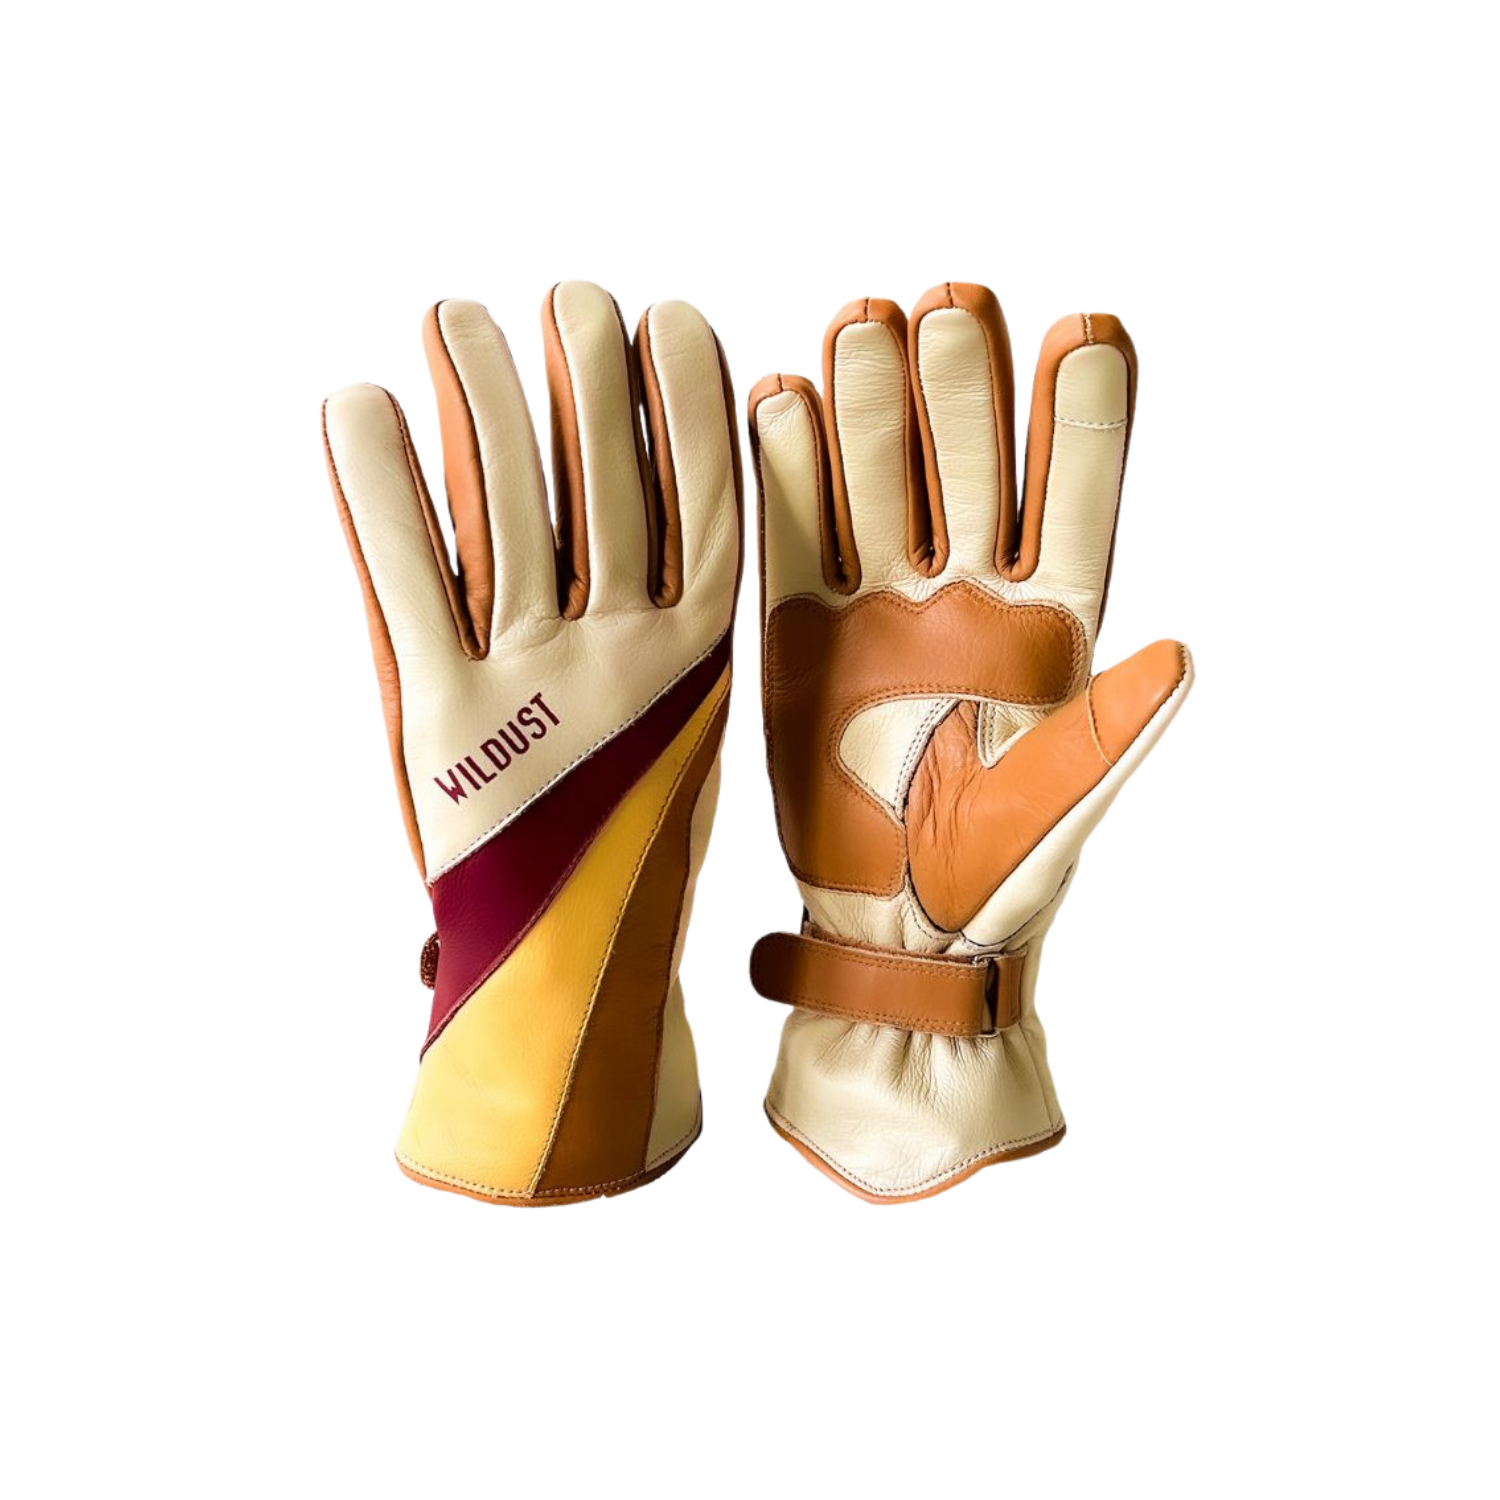 wildust colouful women&#39;s leather gloves